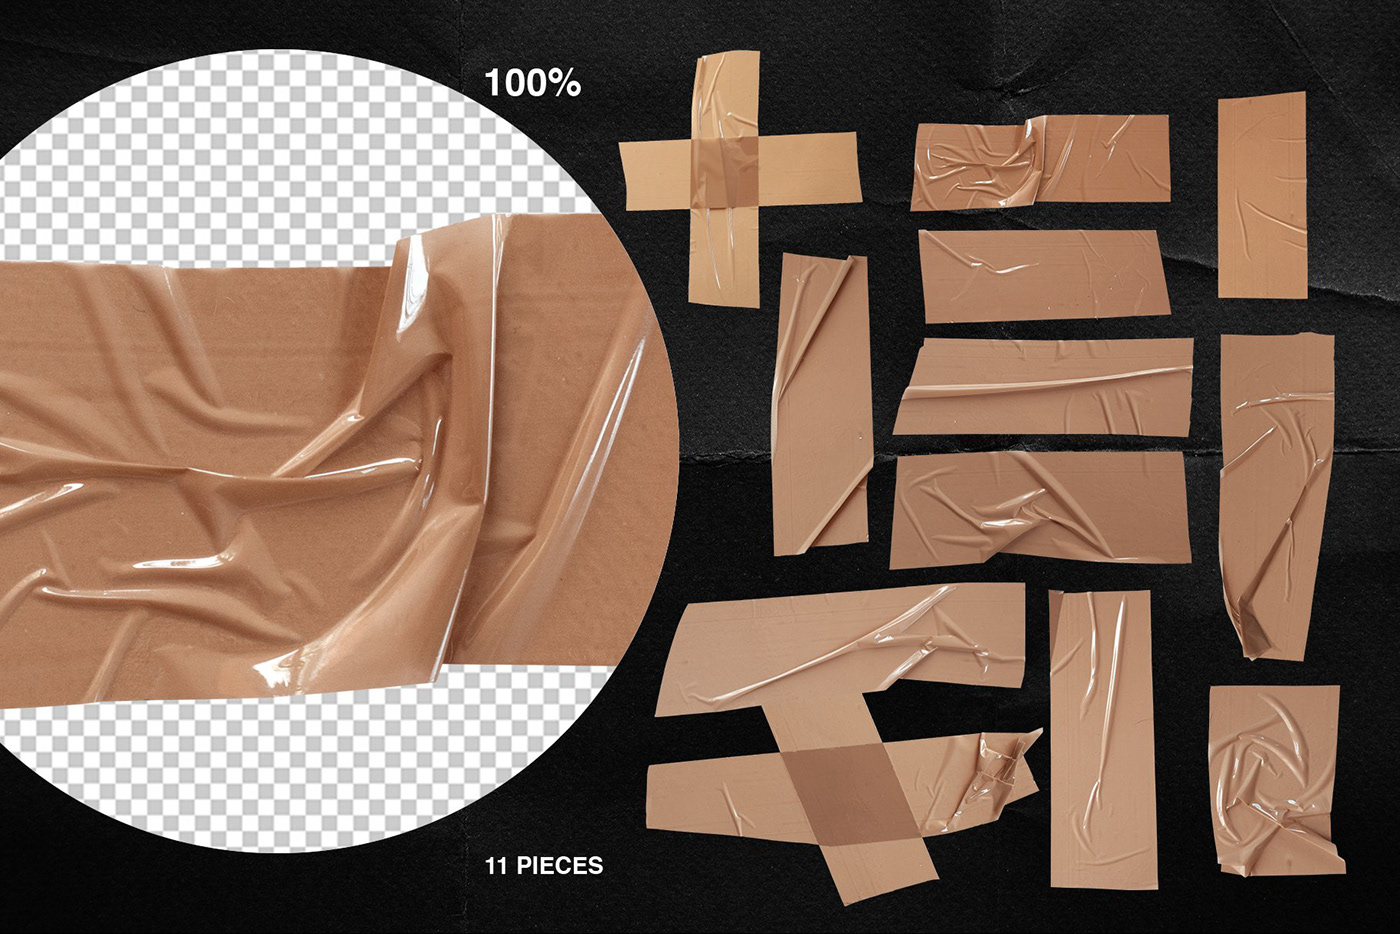 textures plastic wrap holographic logos mockups Wrap paper tape